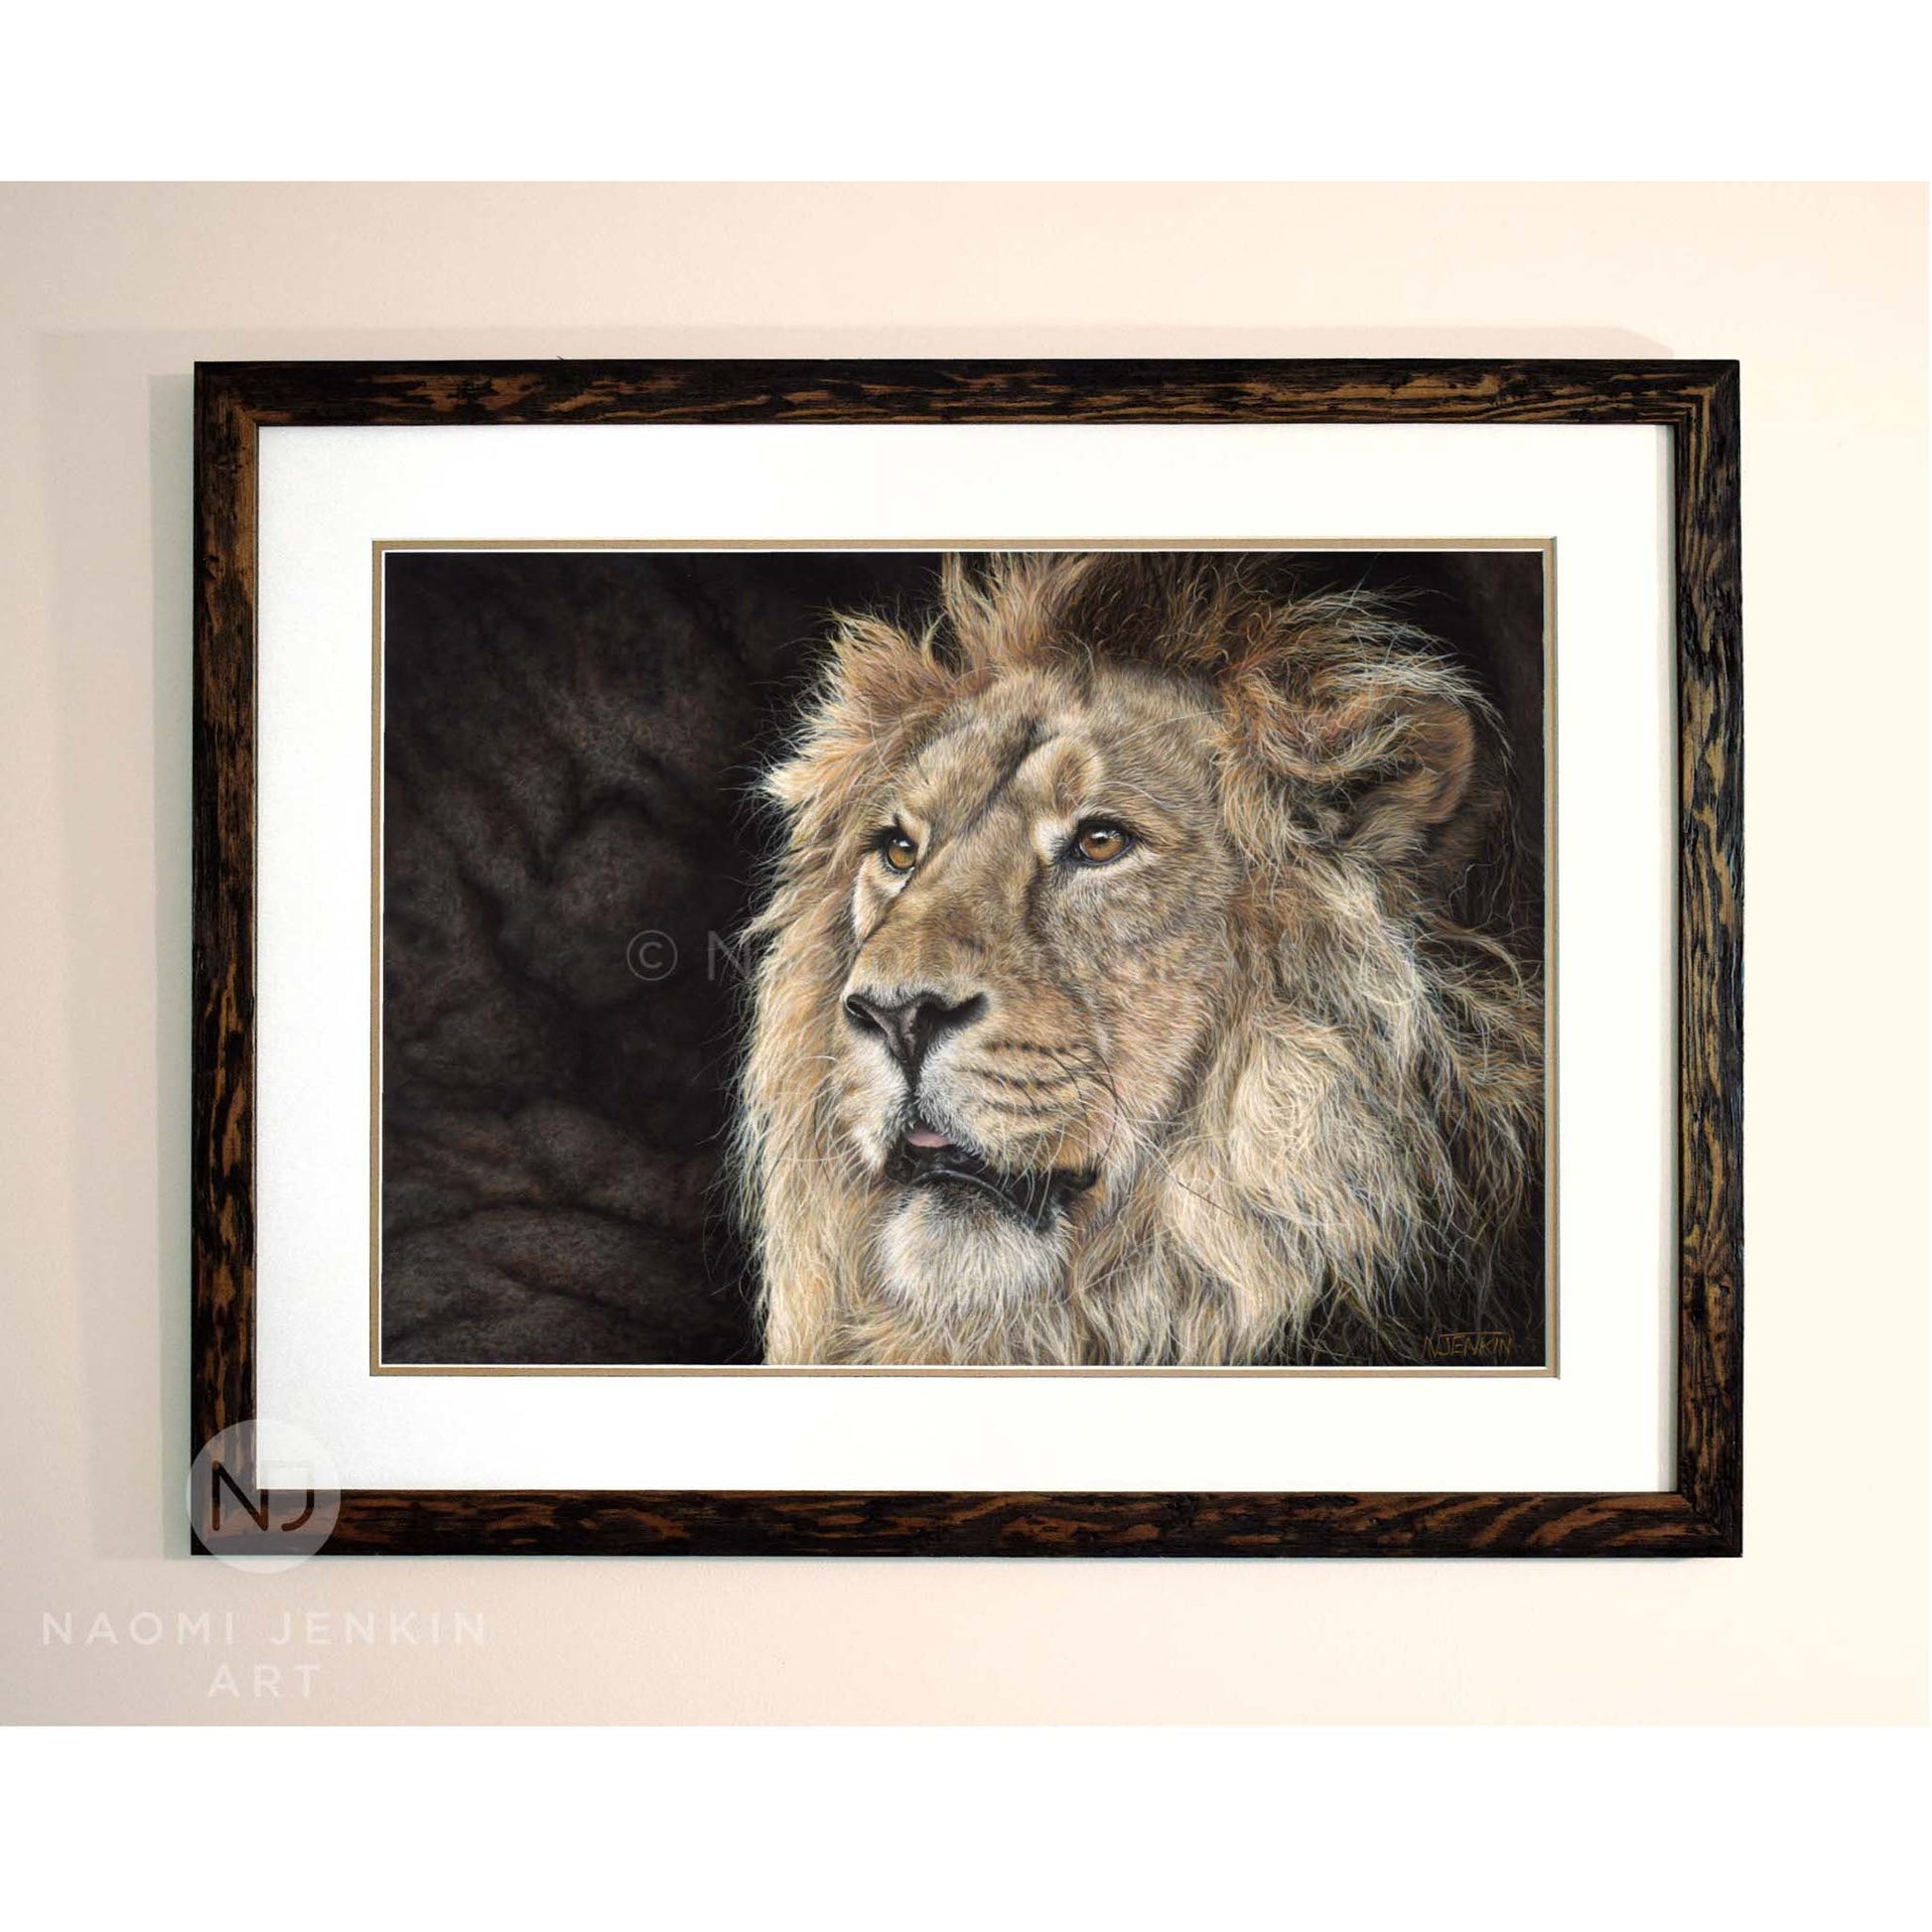 Framed lion art drawing by wildlife artist Naomi Jenkin